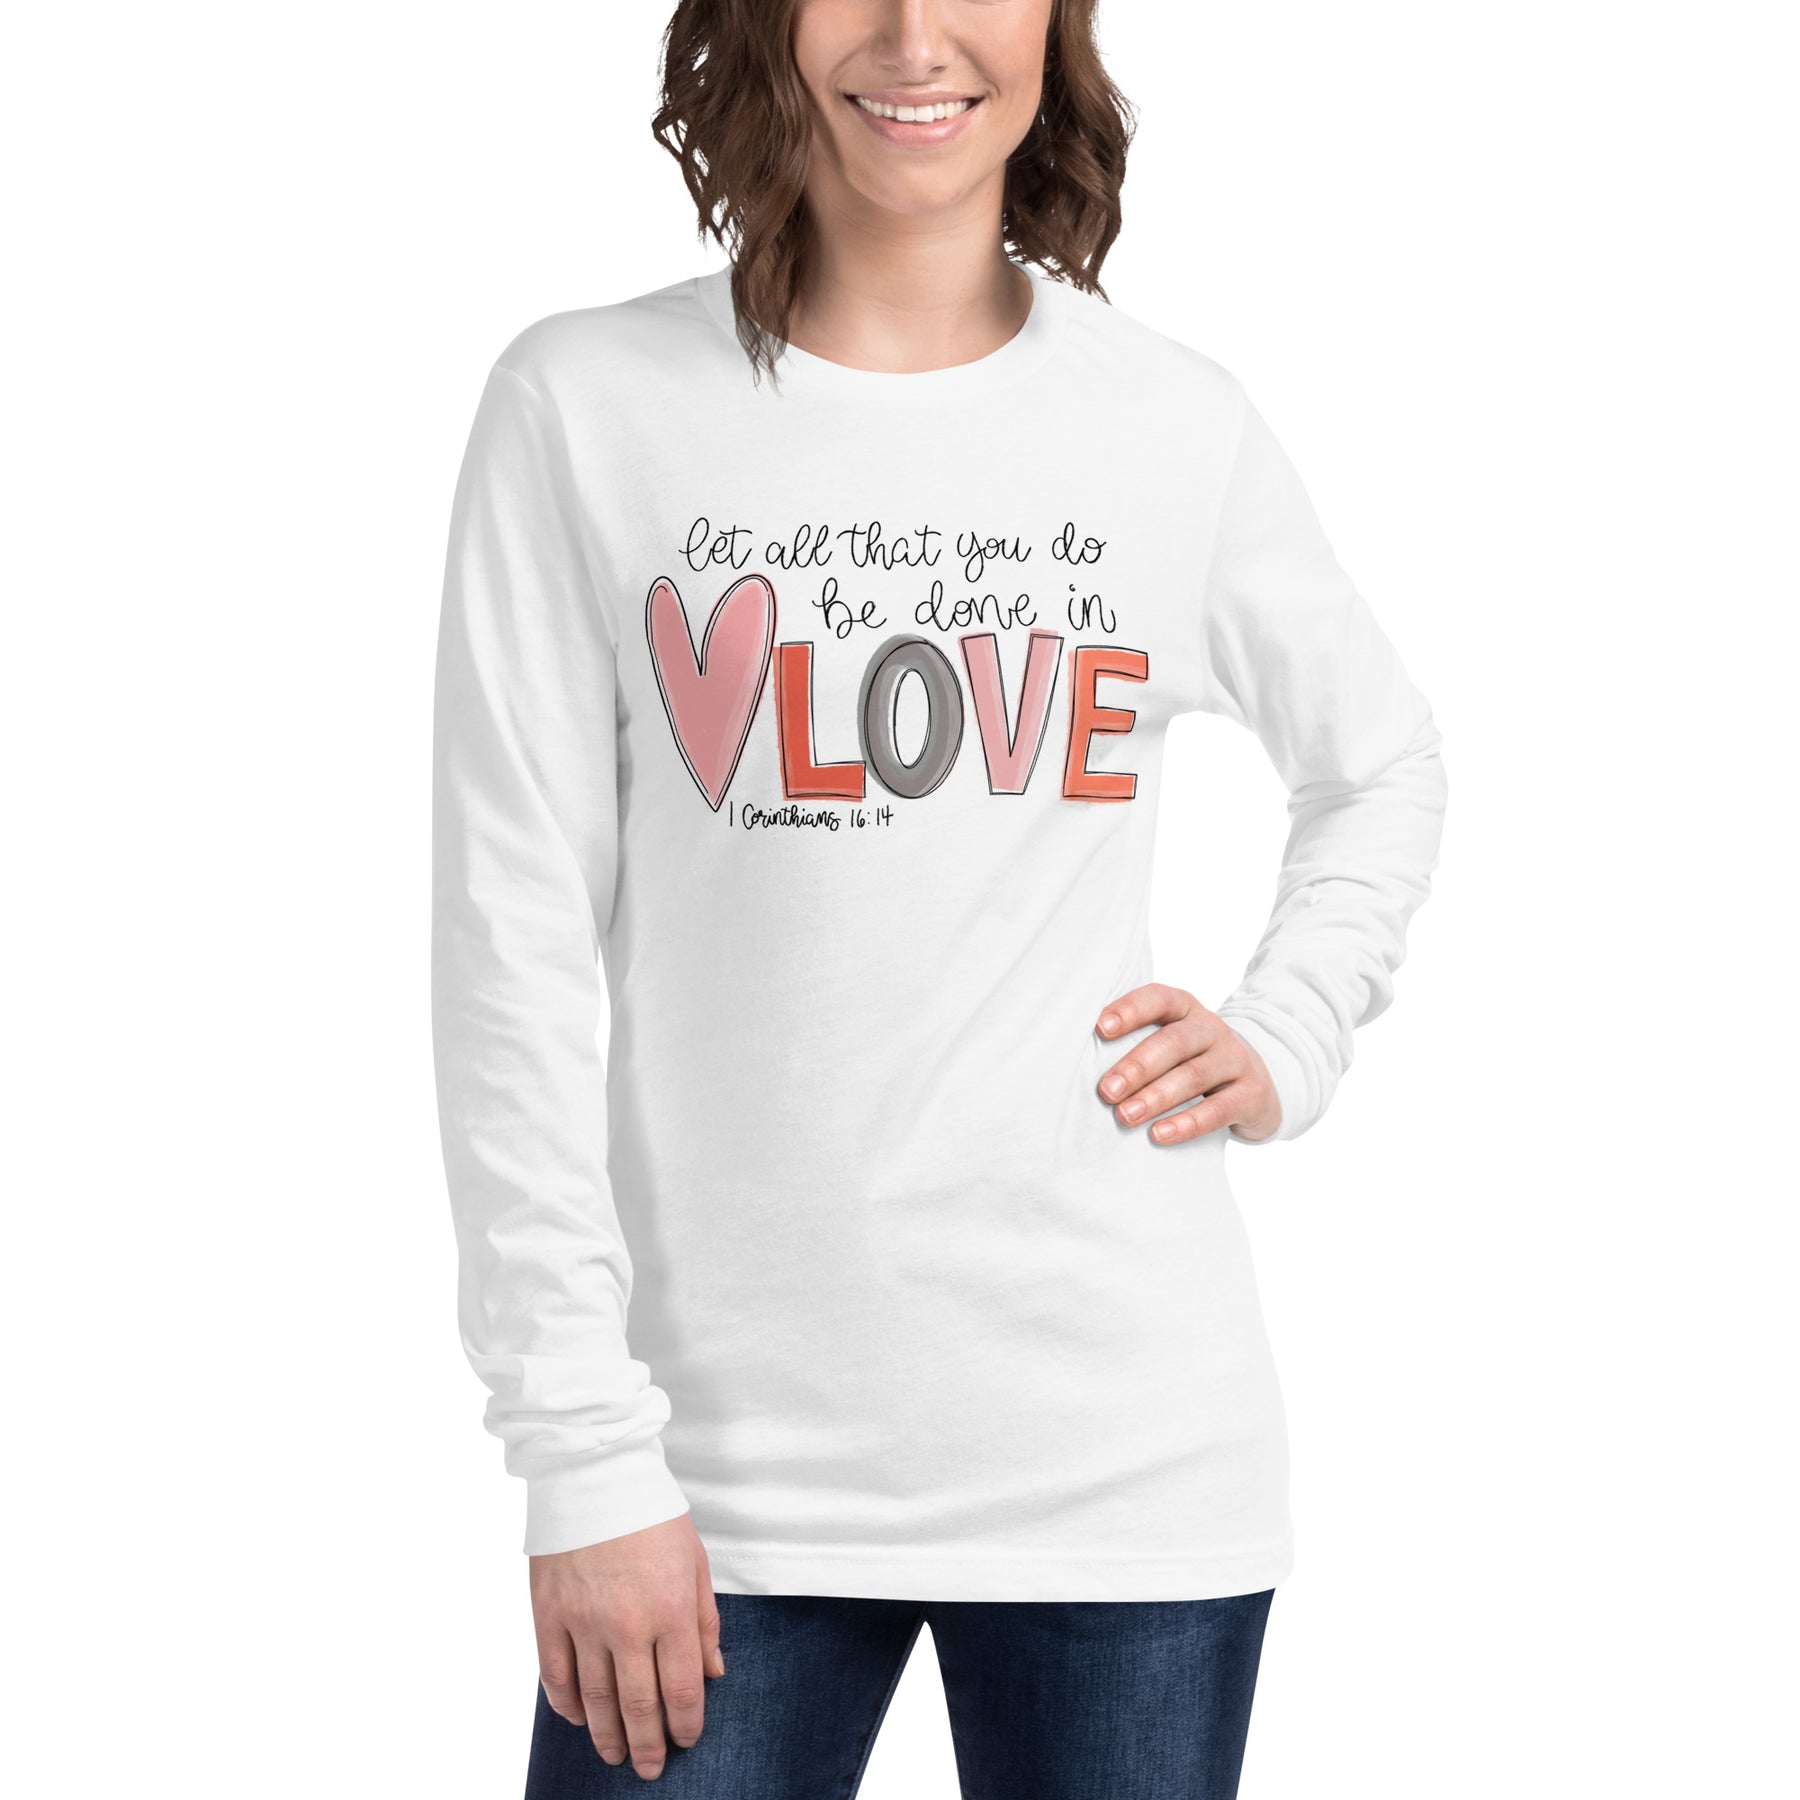 Love - 1 Corinthians 16:14 - Women's Long Sleeve T-Shirt